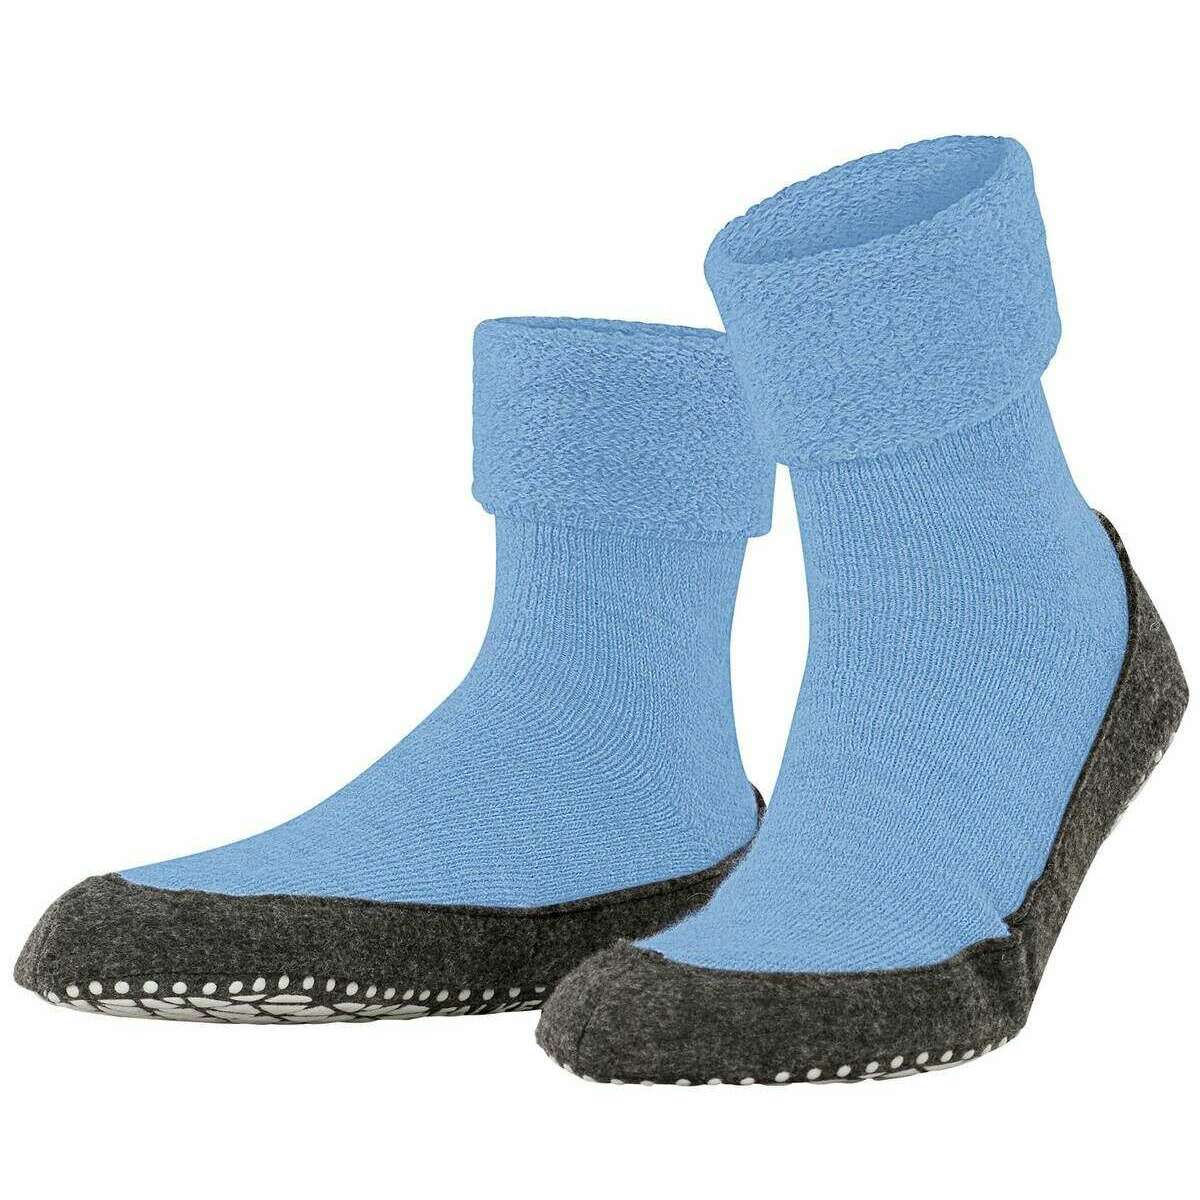 Falke Cosyshoe Slipper Socks - Lagoon Blue